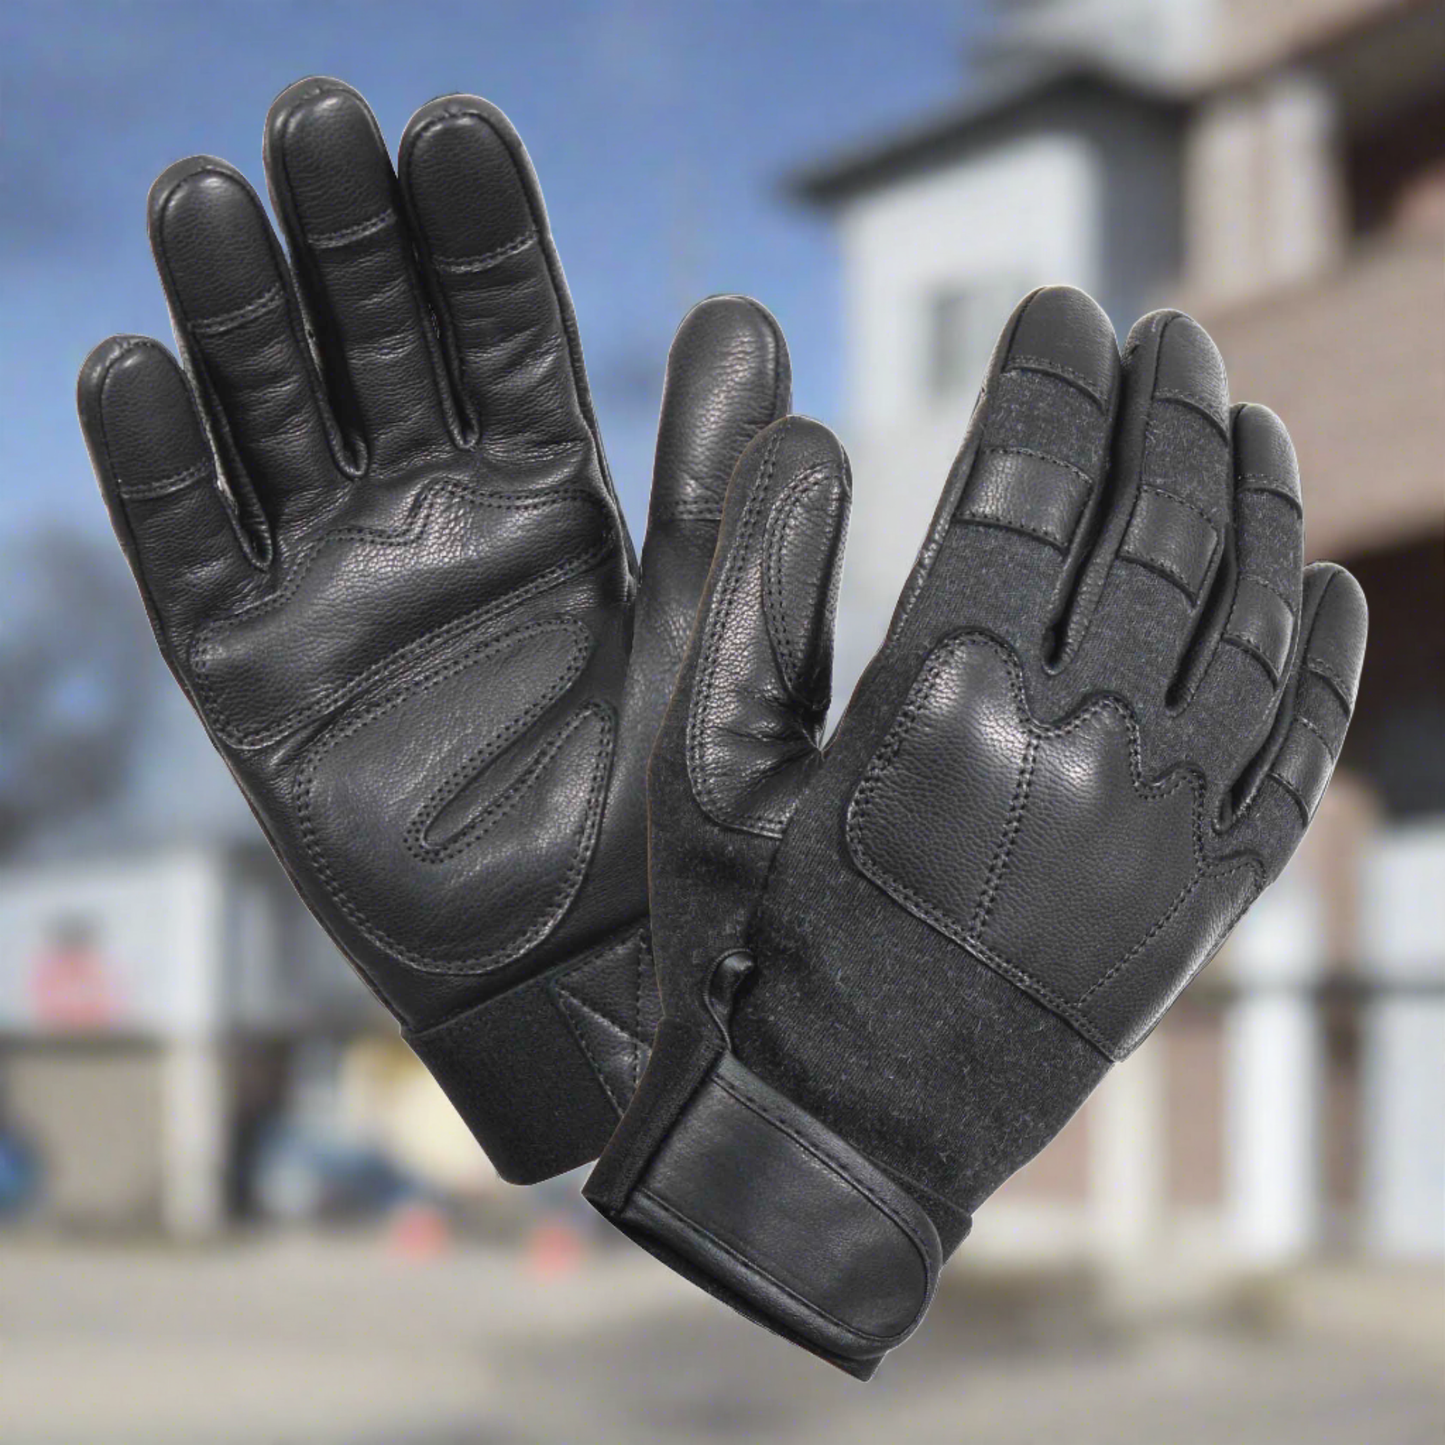 Hard Knuckle Gloves - Rothco Leather Knuckle Gloves